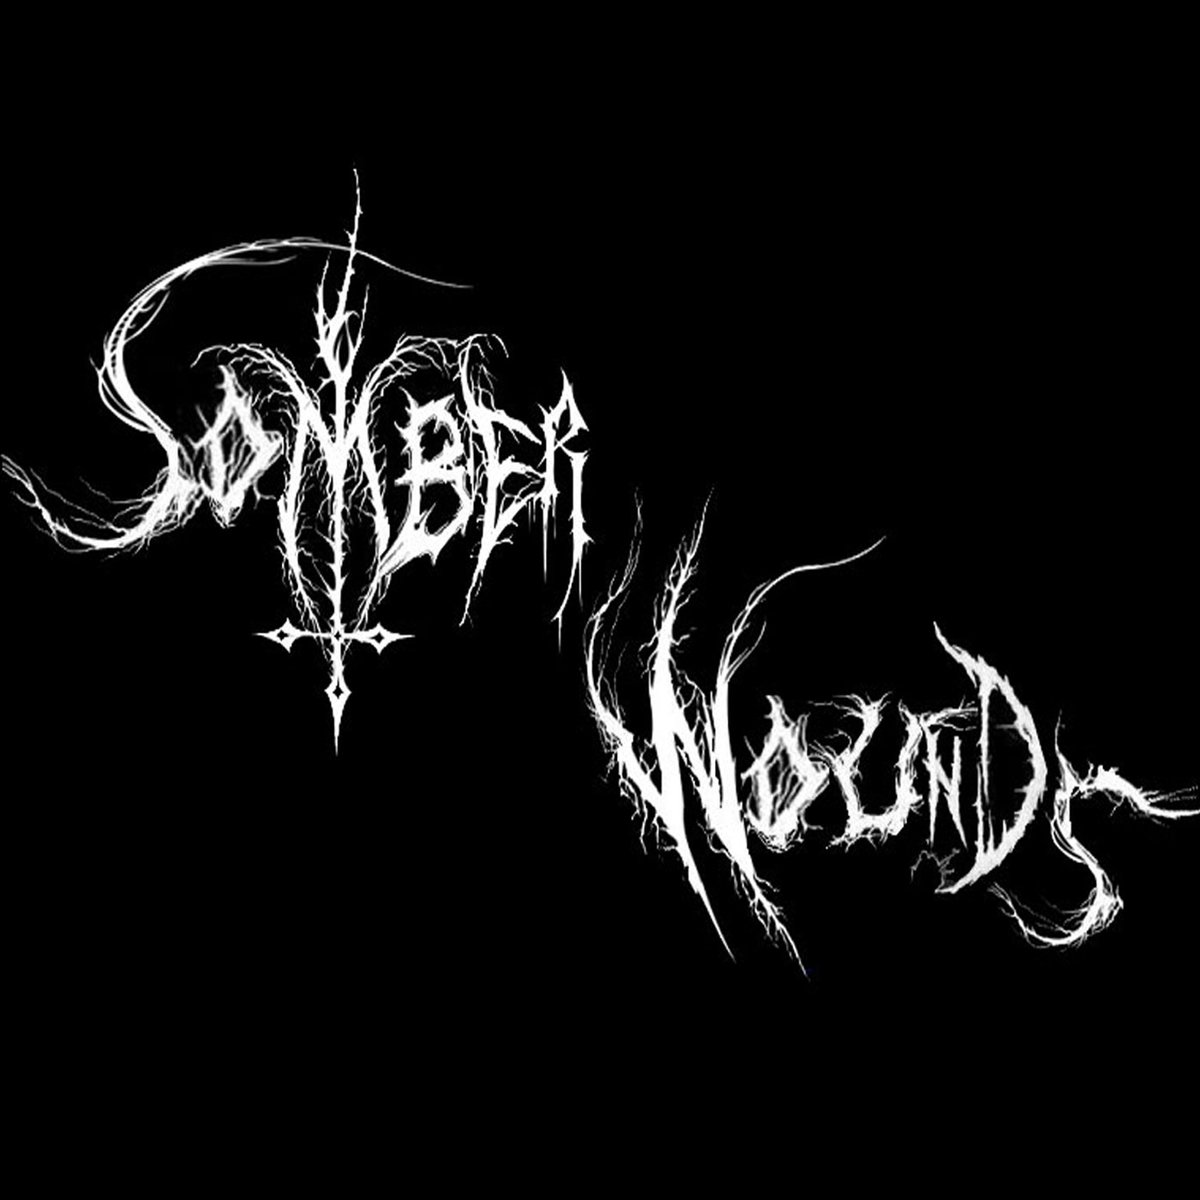 Somber Wounds - Somber Wounds  (2020)
Depressive Black Metal from Turkey
#blackmetal #depressive #turkishblackmetal
Full Album:youtube.com/watch?v=oUTK4i…